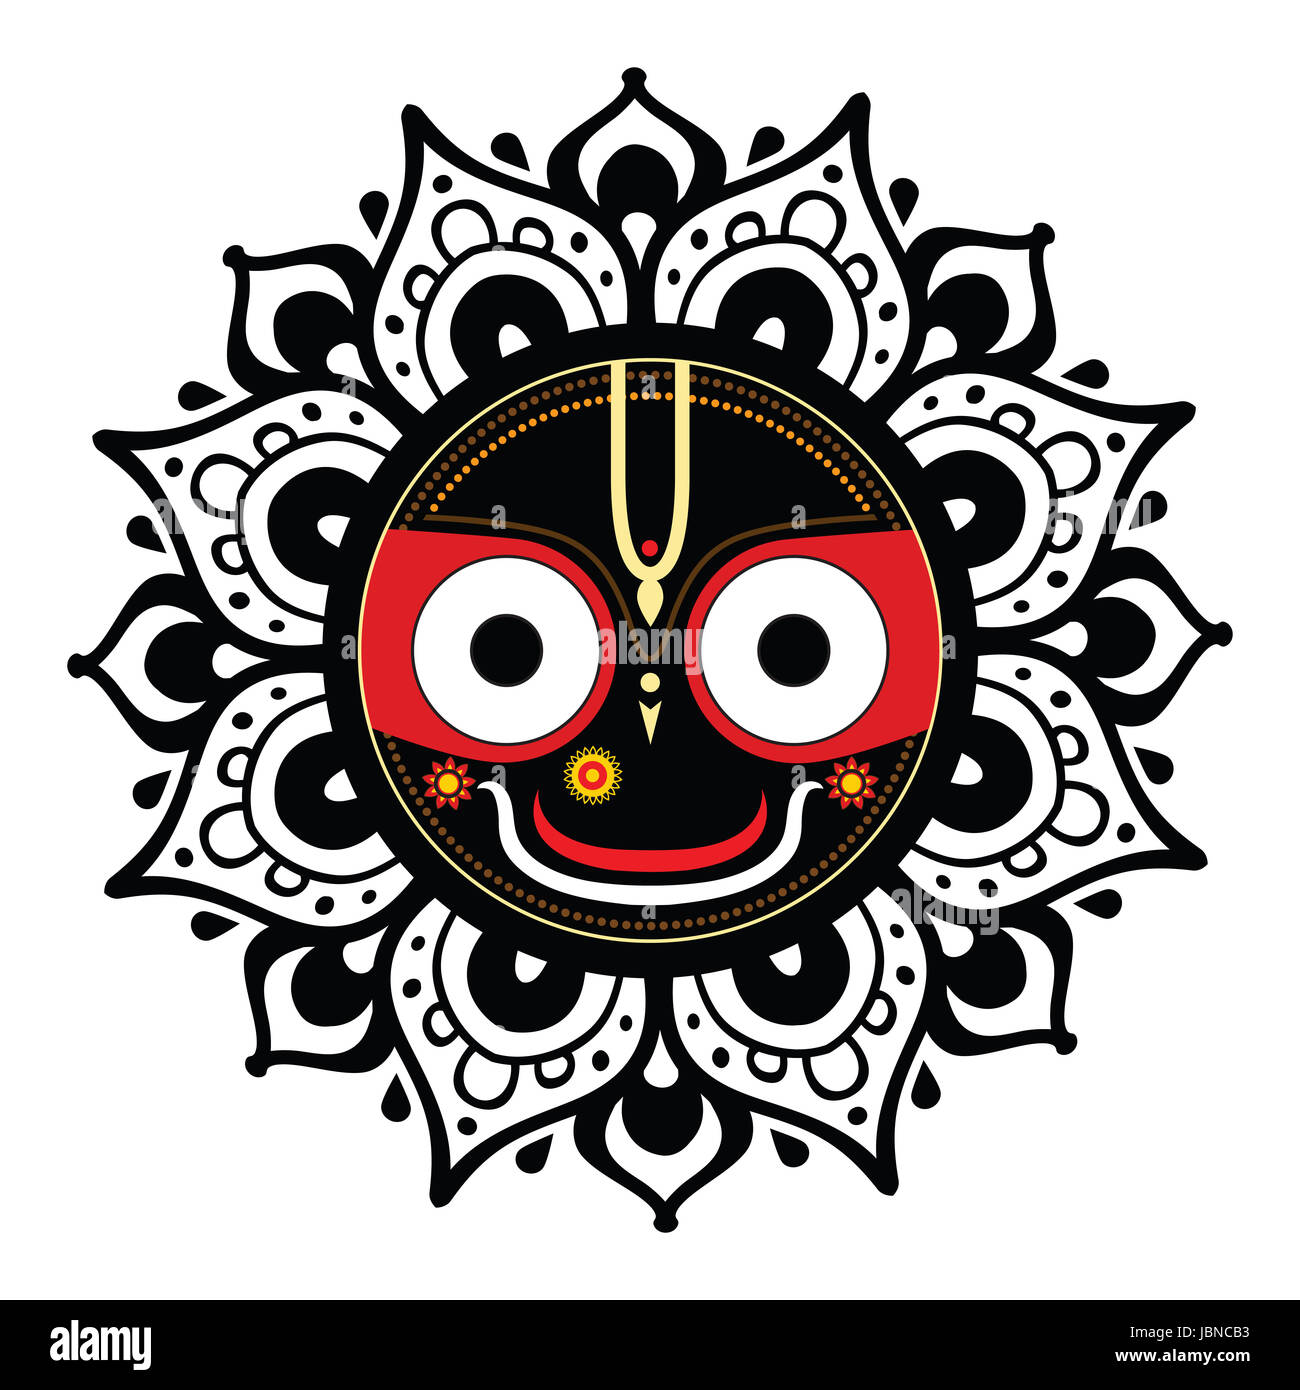 Jagannath. Indian God of the Universe. Lord Jagannatha. Stock Photo